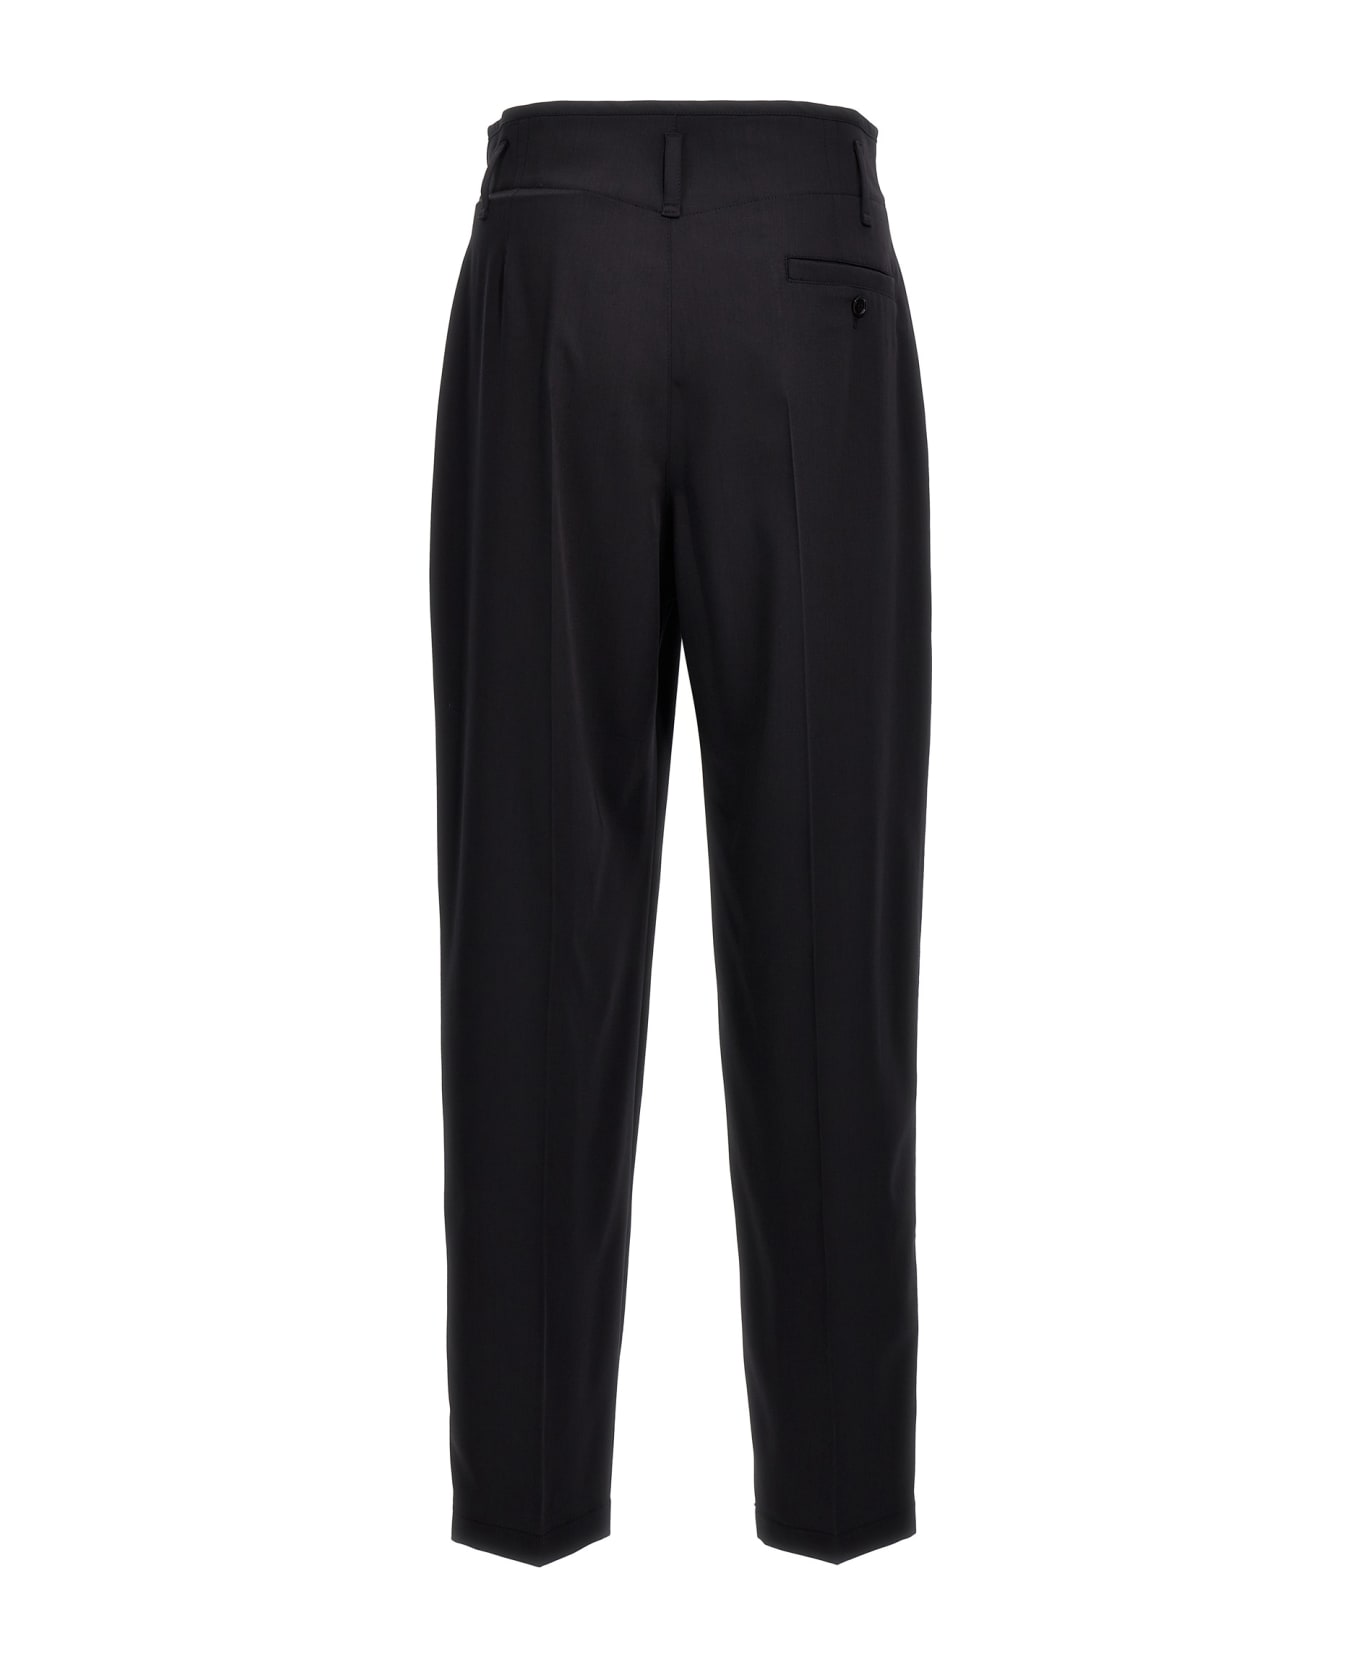 Lemaire 'tailored' Pants - BK995 JET BLACK